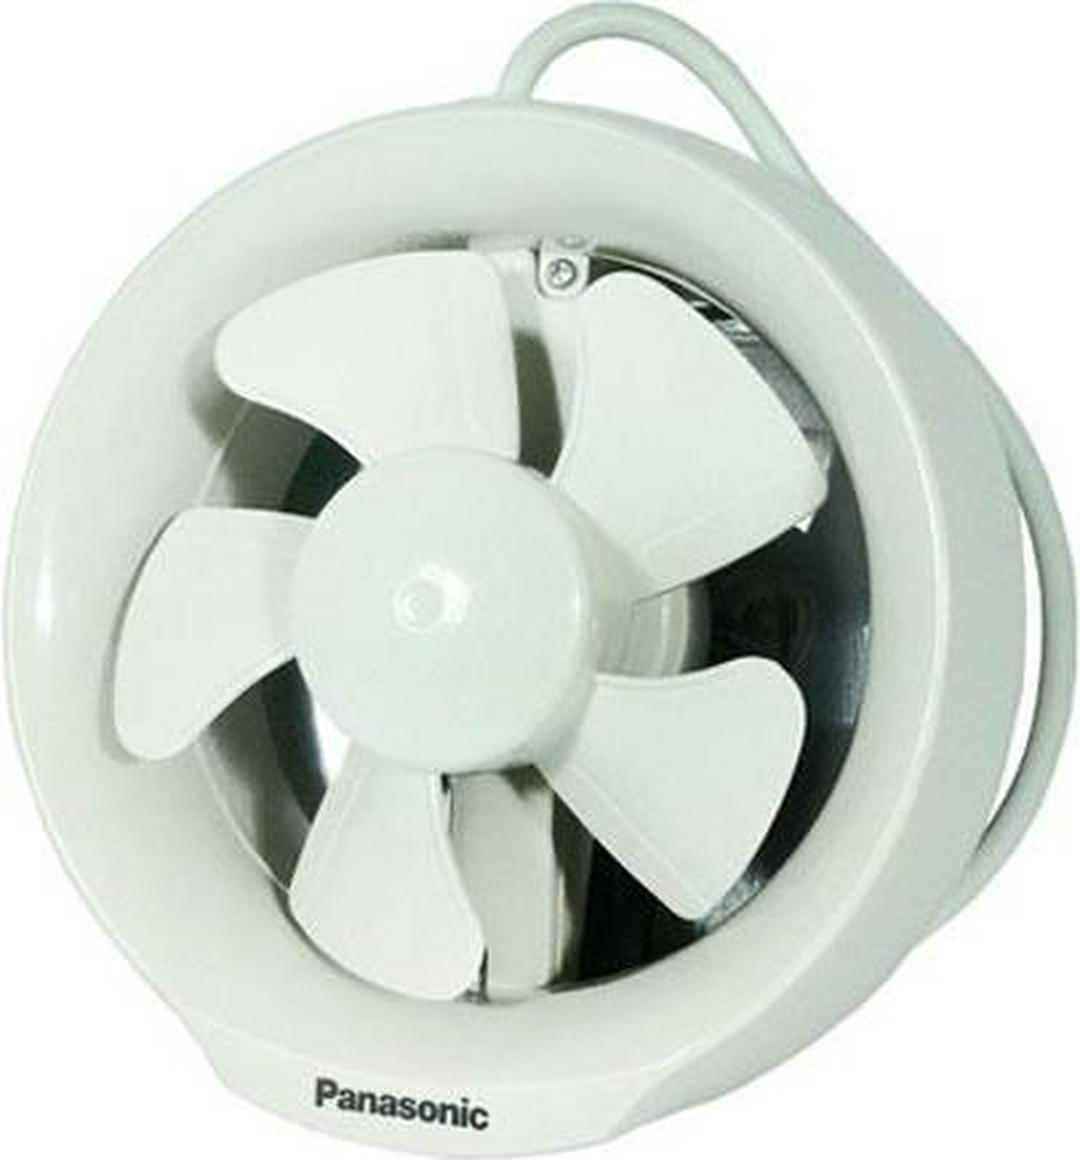 Panasonic 8 Inch Window Mount Ventilating Fan (FV-20WU4) - White